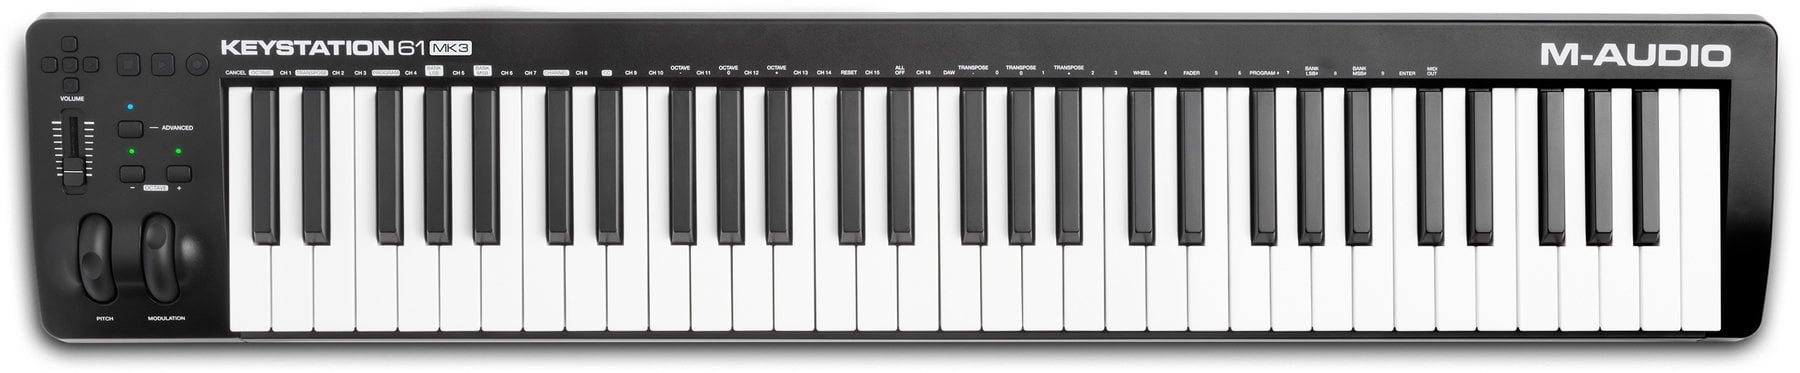 Tastiera MIDI M-Audio Keystation 61 MK3